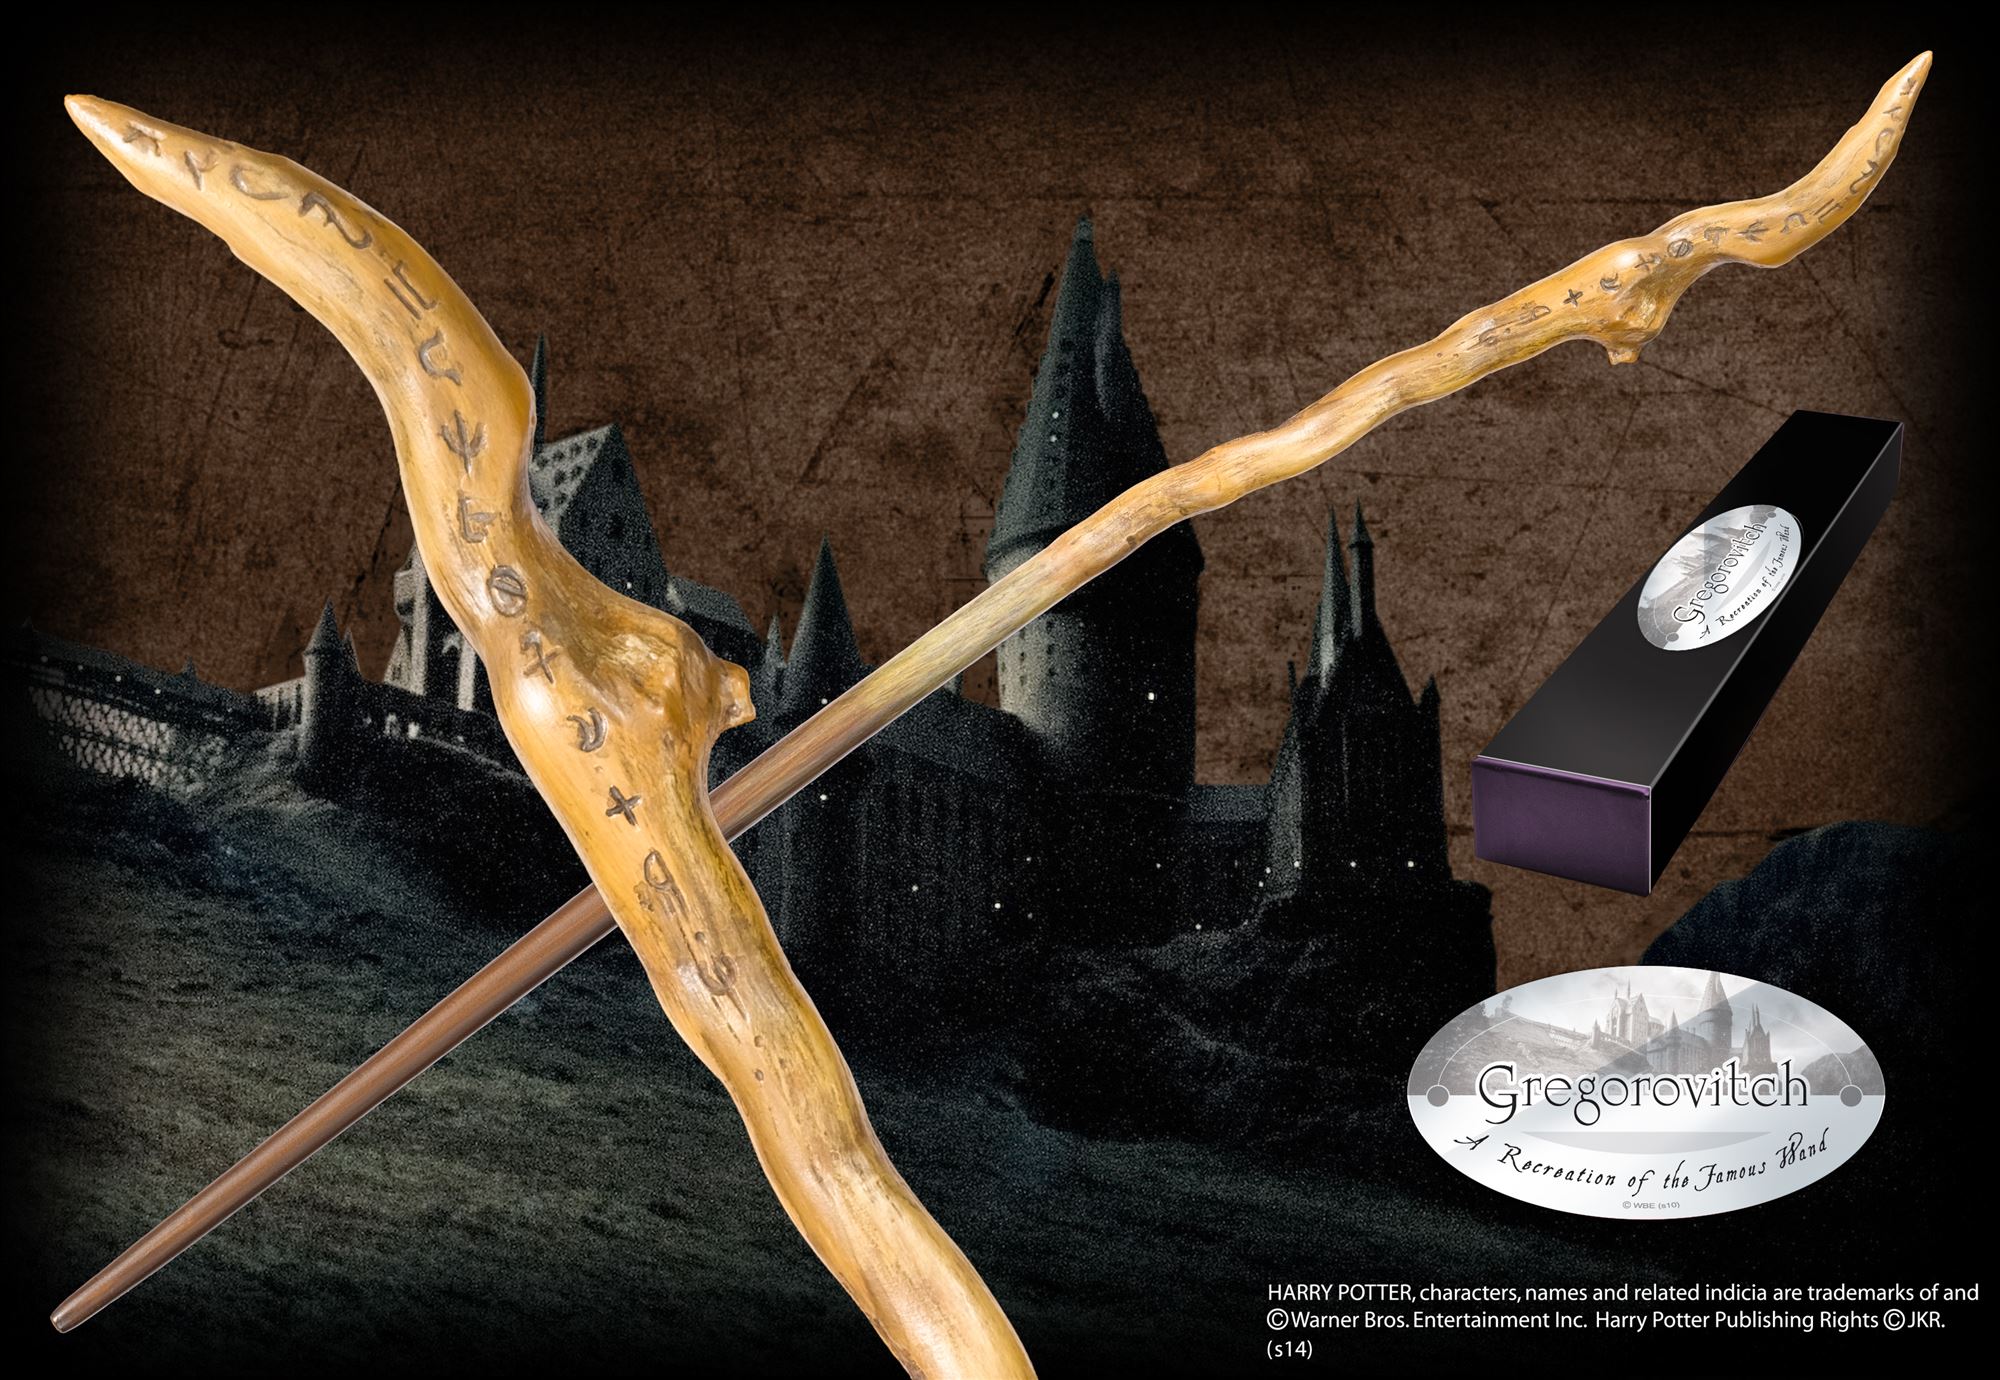 Harry Potter Wand - Gregorovitch